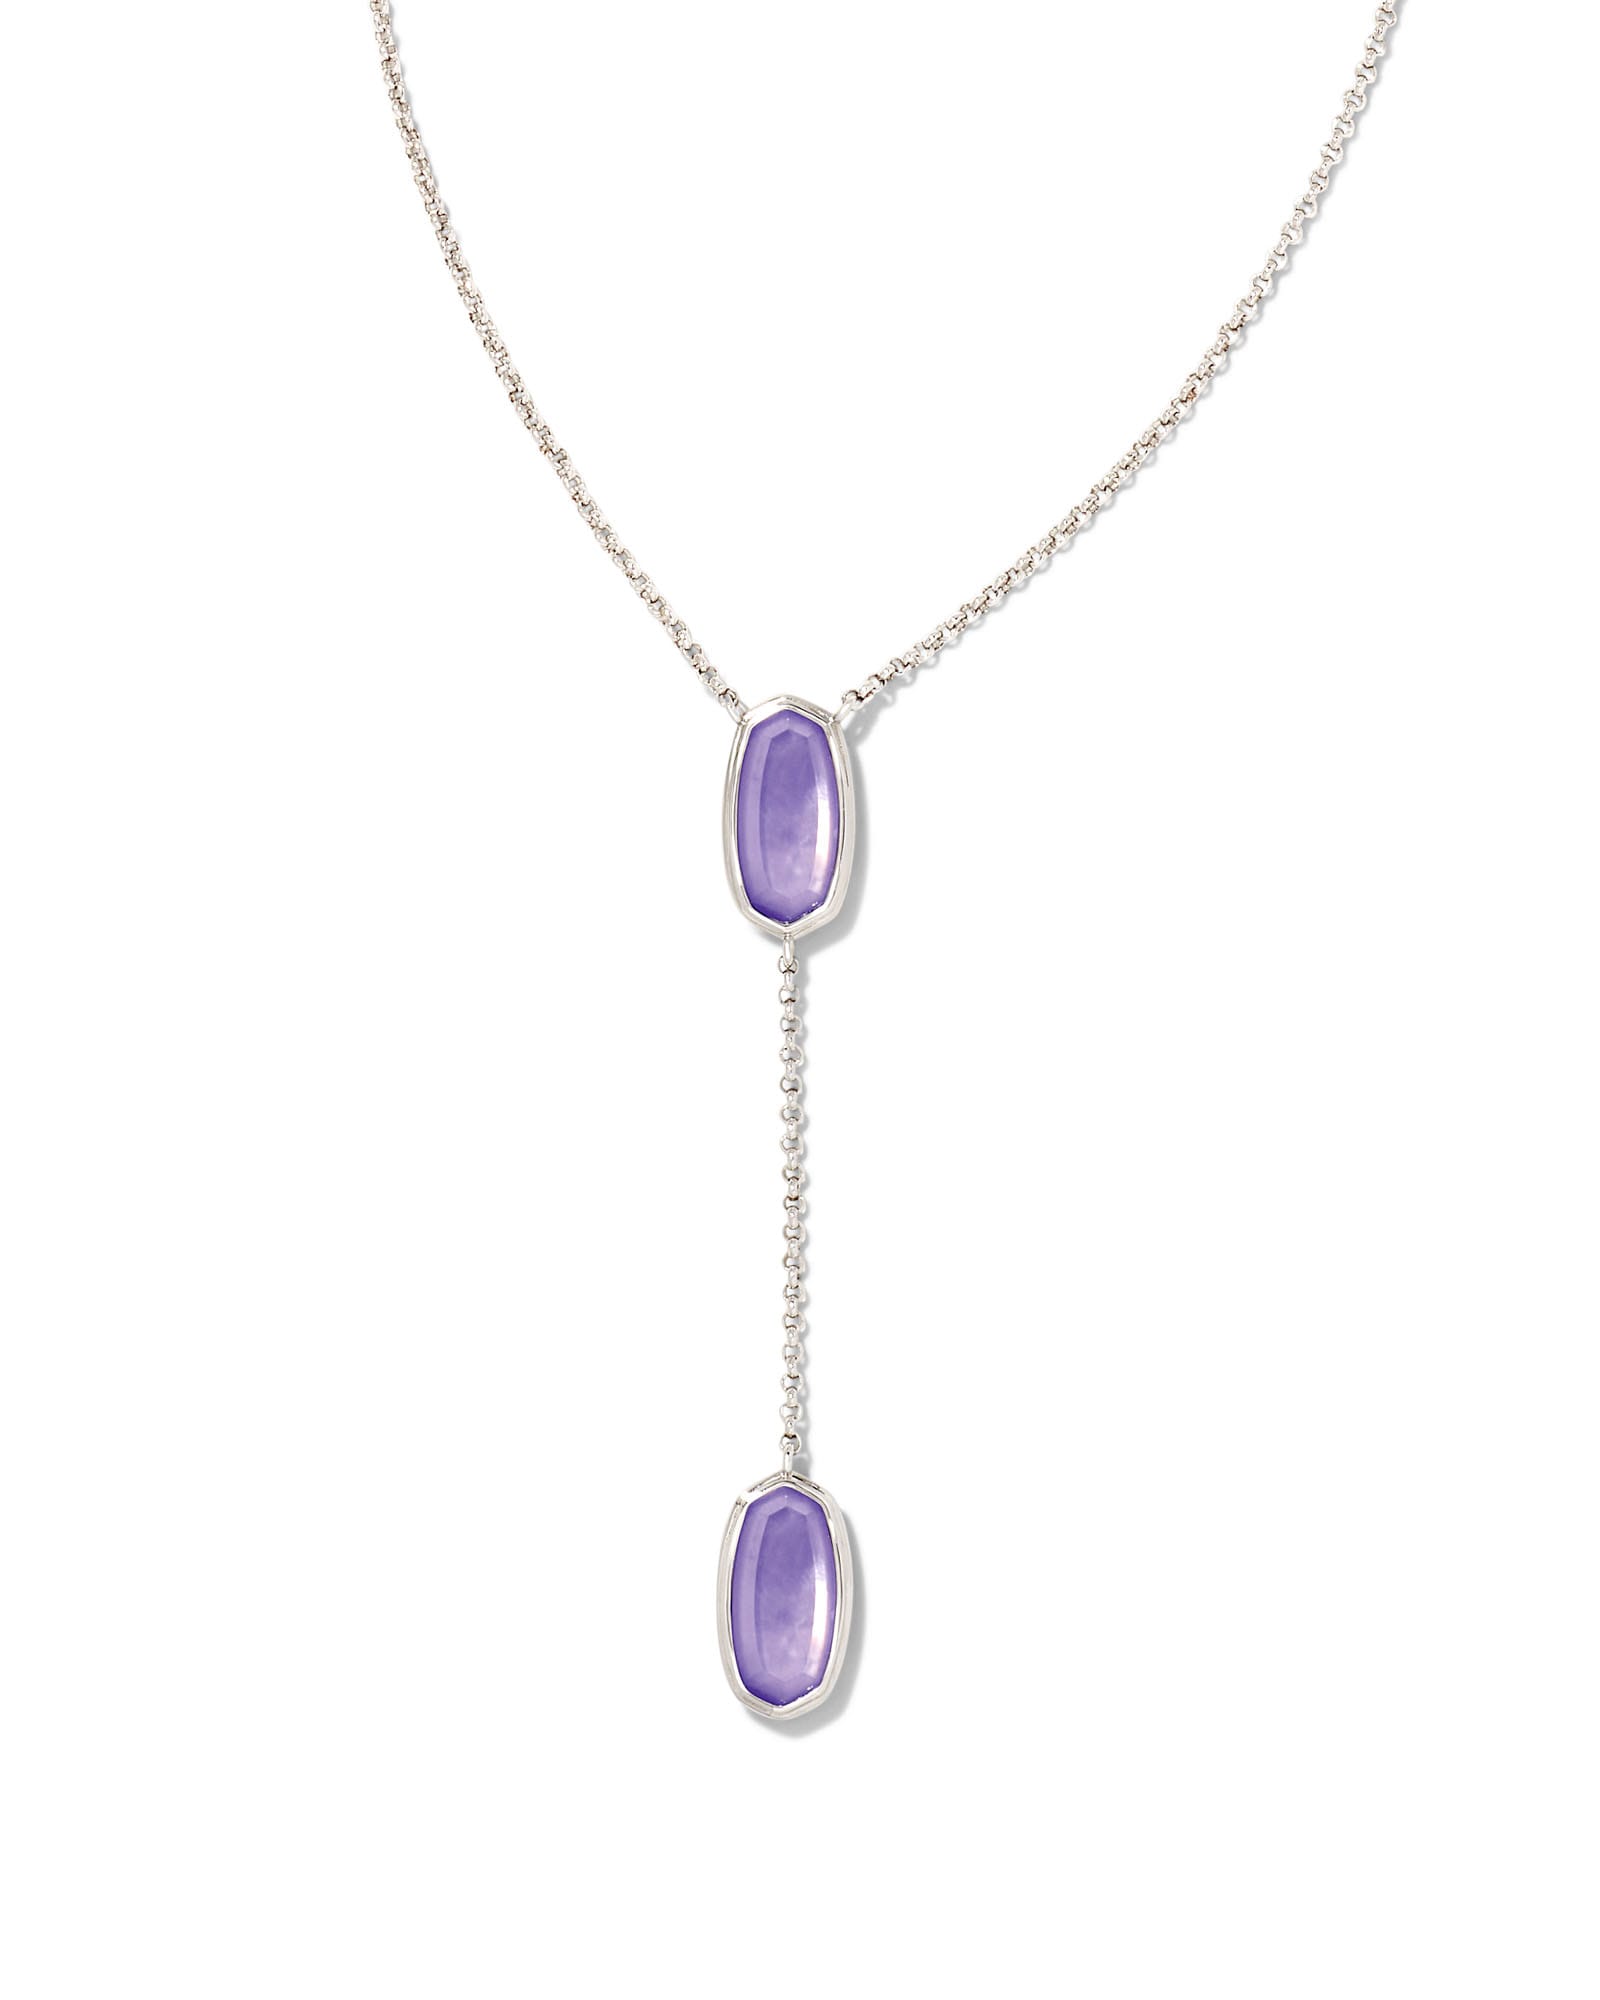 Framed Elisa Silver Y Necklace in Lavender Opalite Illusion